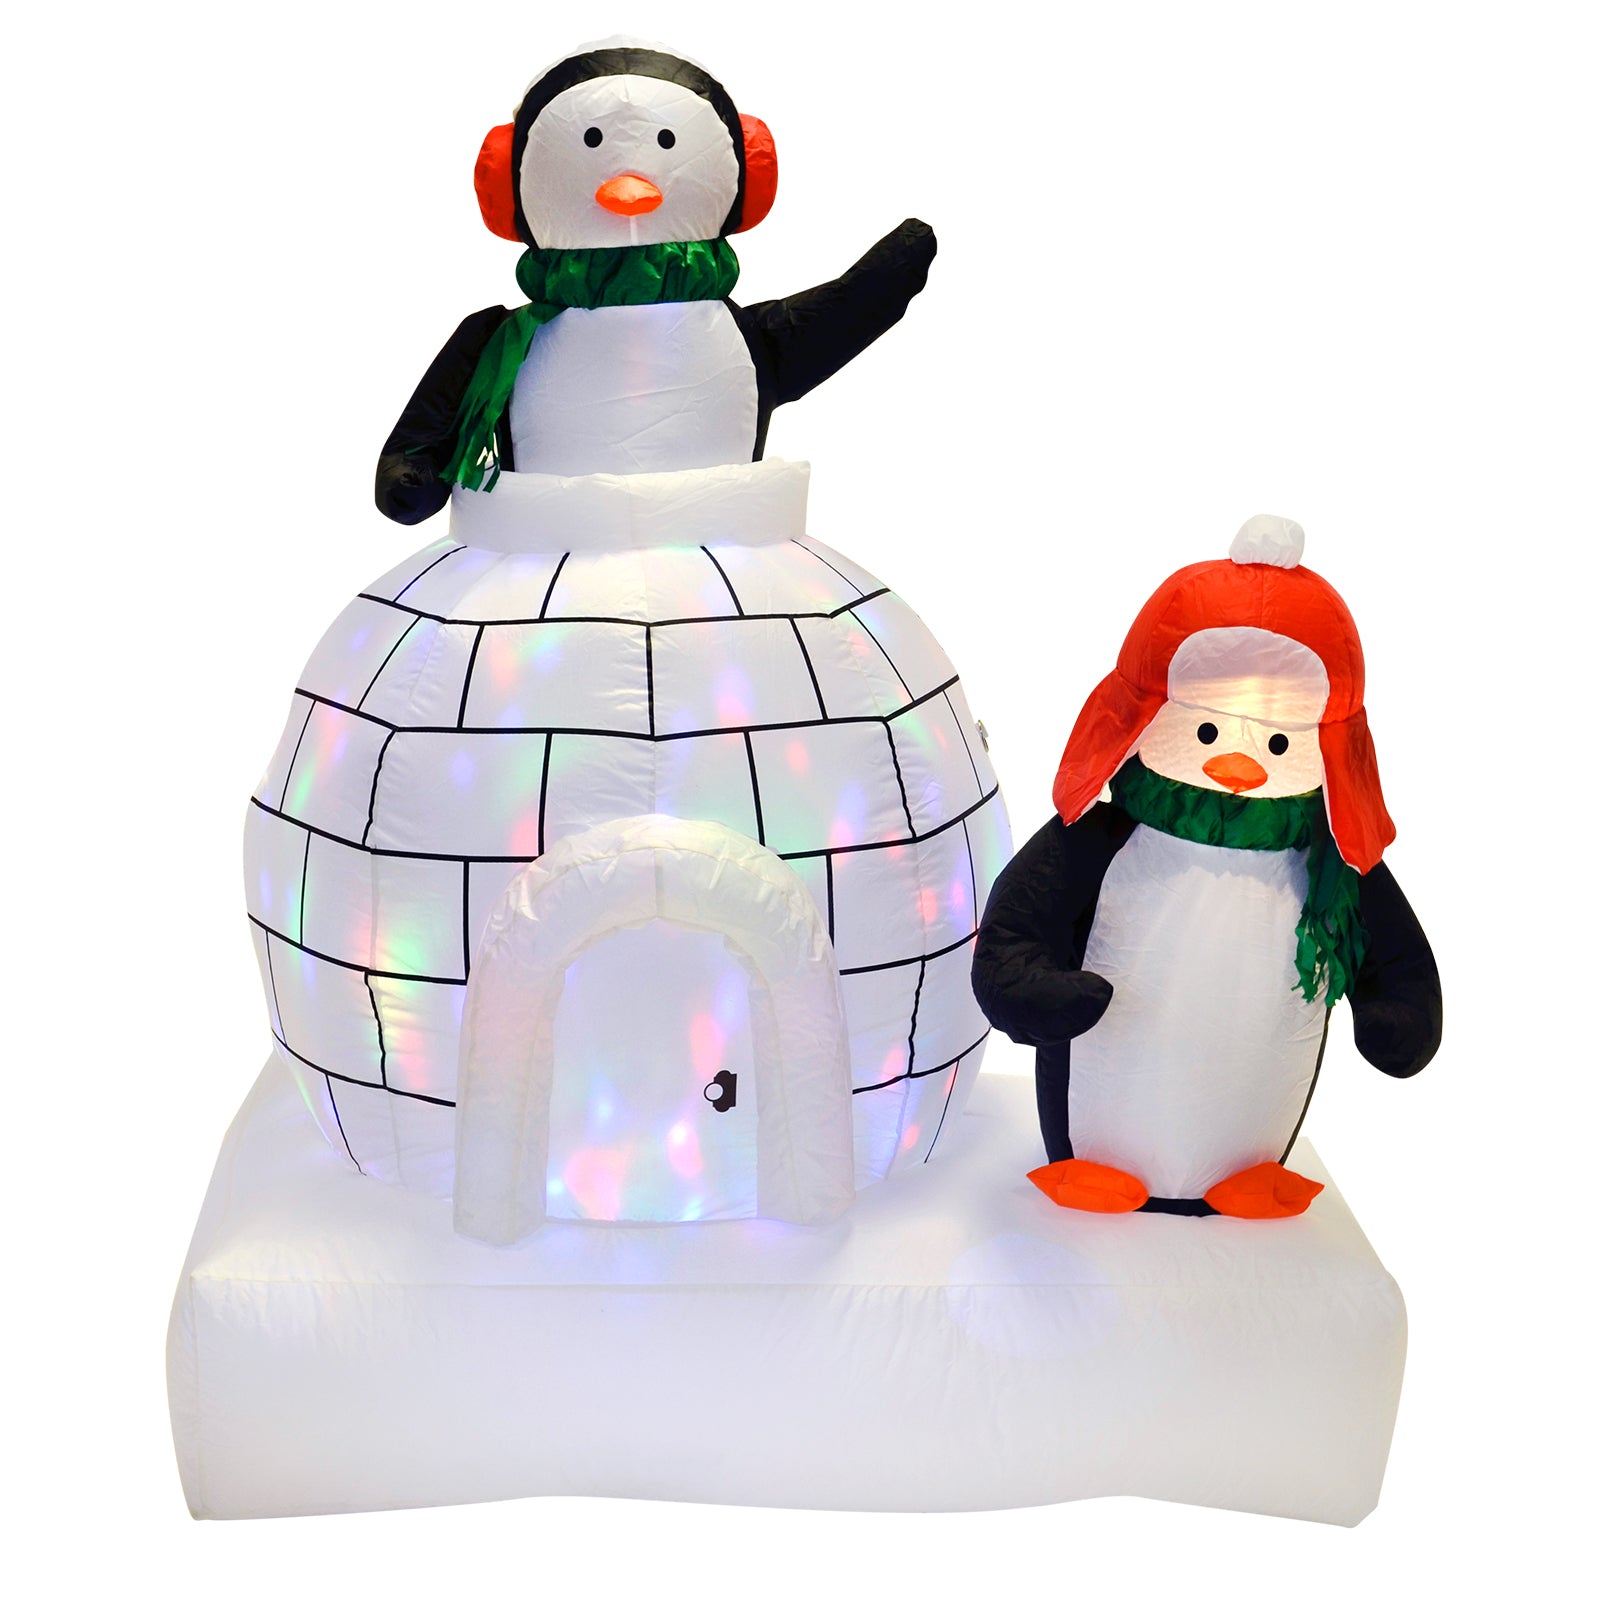 Mr Crimbo 5ft Penguin And Igloo Inflatable With Disco Lights - MrCrimbo.co.uk -XS4236 - -6ft inflatable